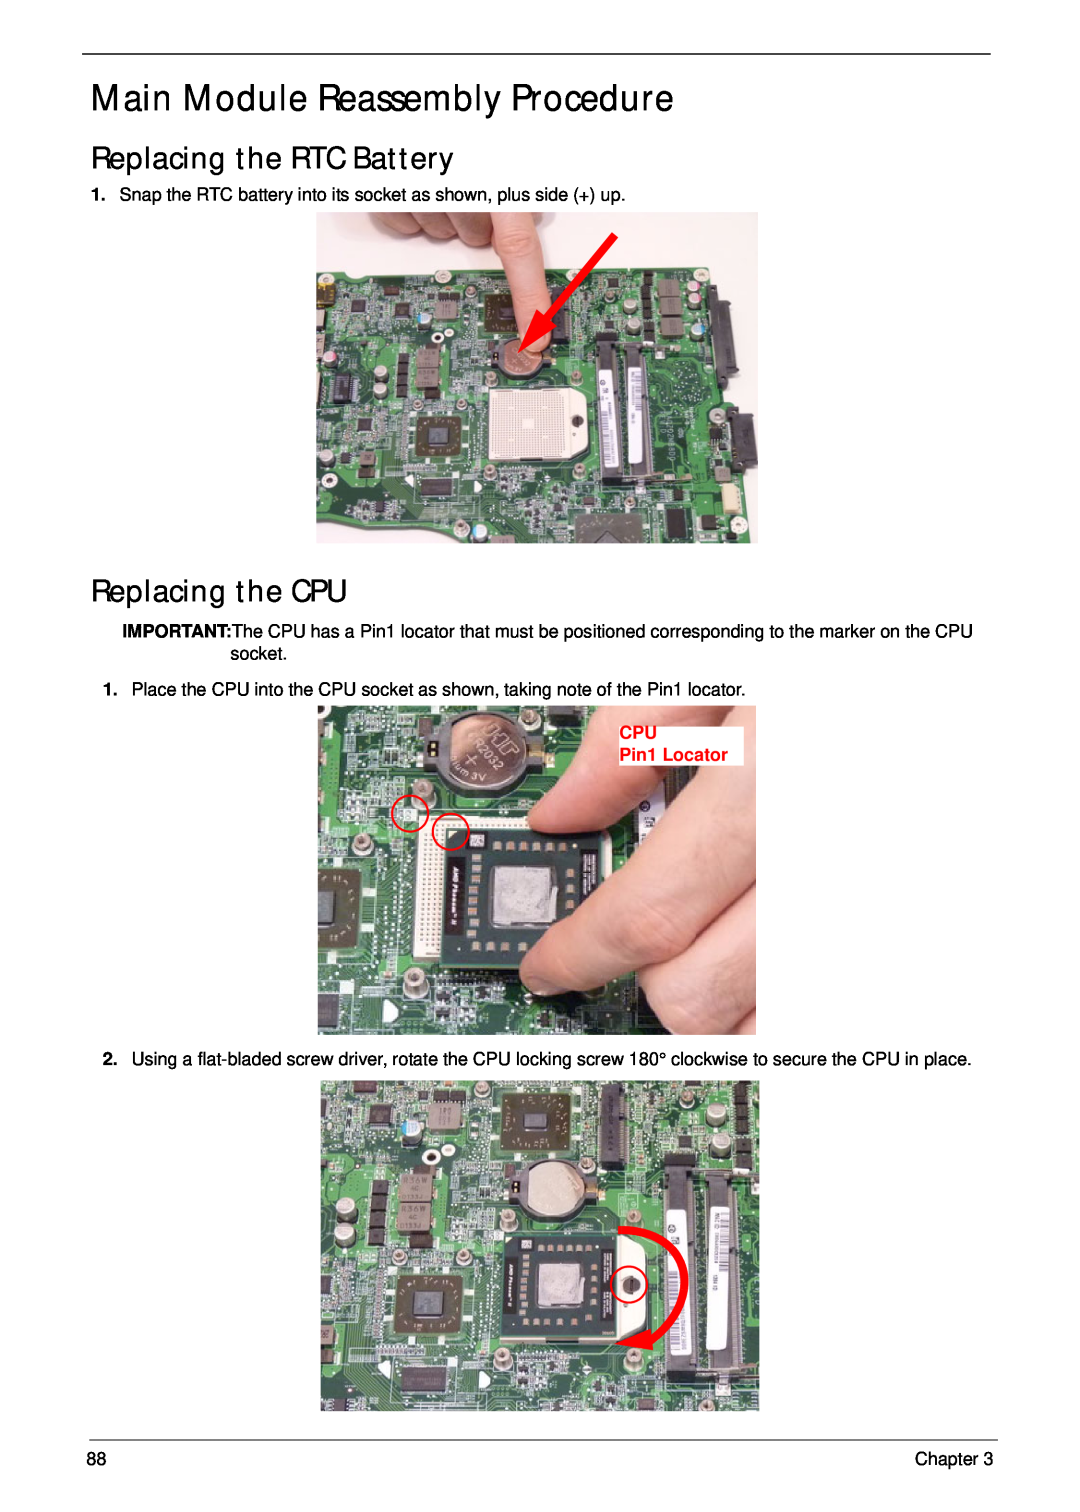 Aspire Digital 4625G Main Module Reassembly Procedure, Replacing the RTC Battery, Replacing the CPU, CPU Pin1 Locator 